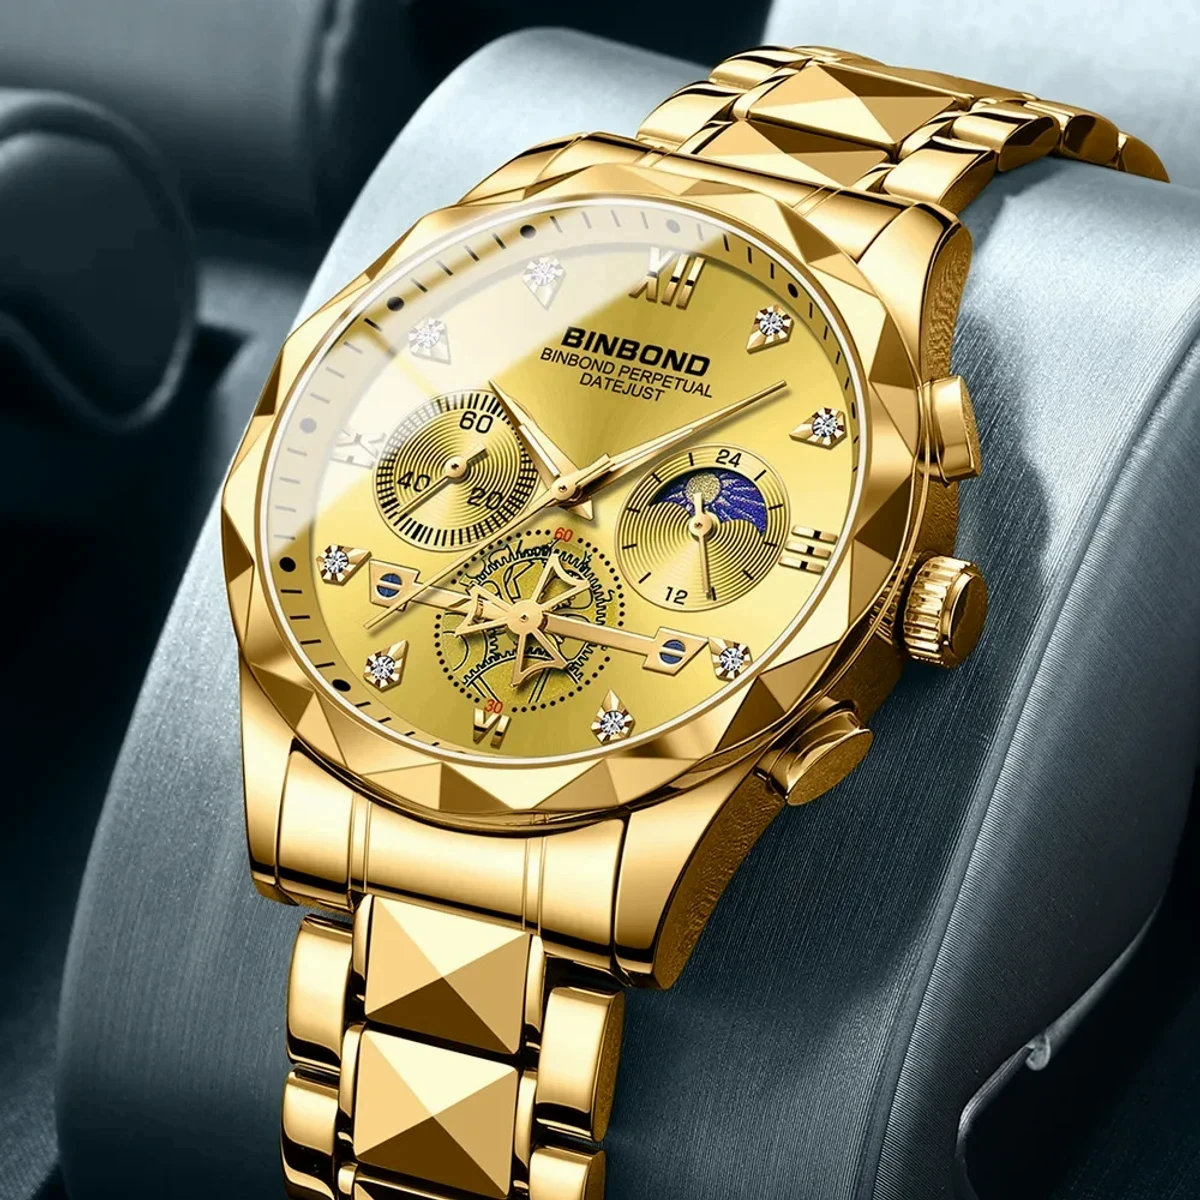 BINBOND Chronograph watch - Full Golden FOR MAN